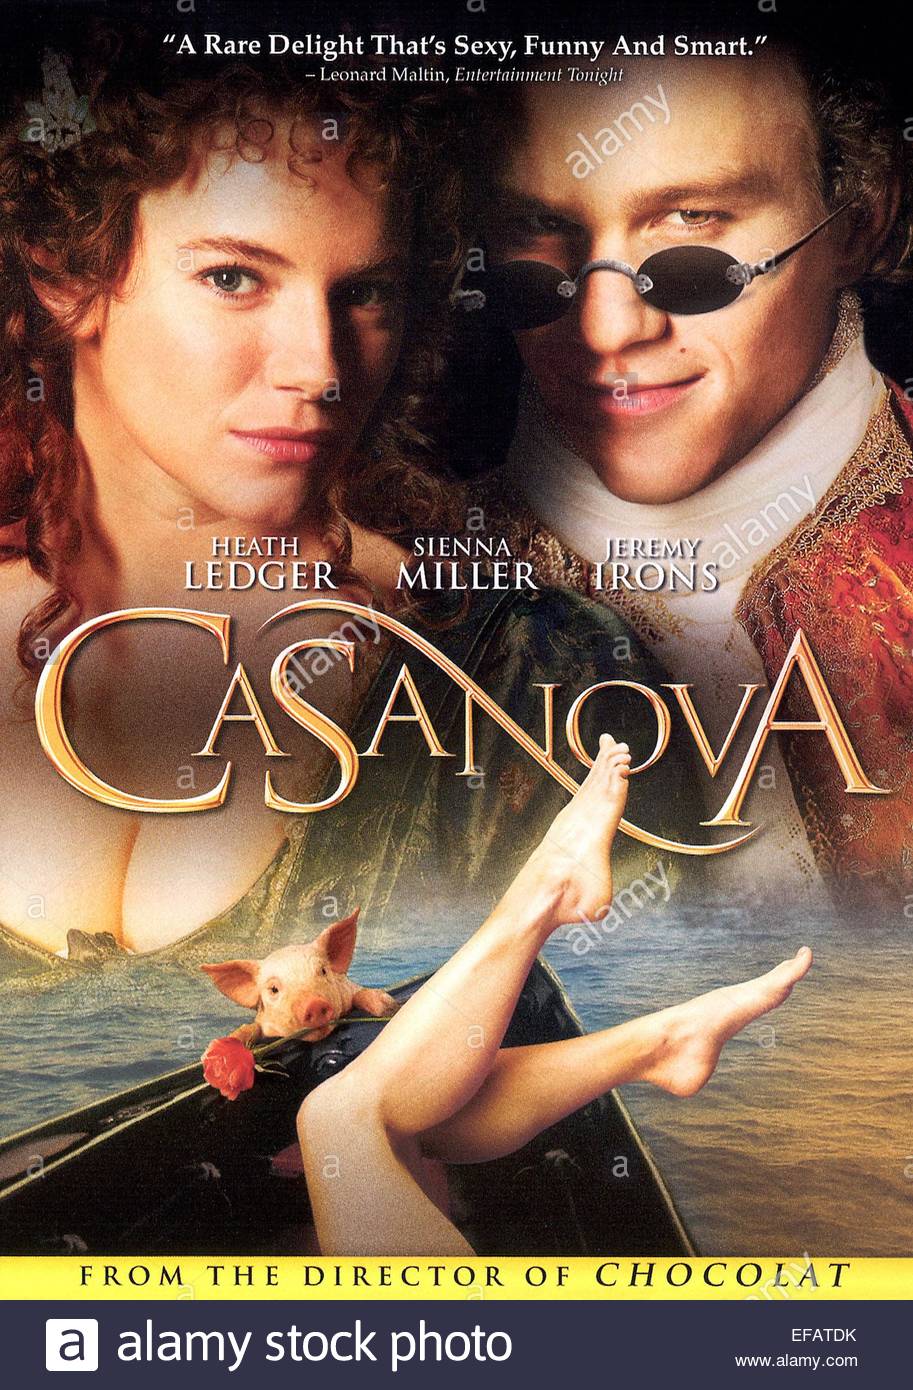 Casanova Main Poster